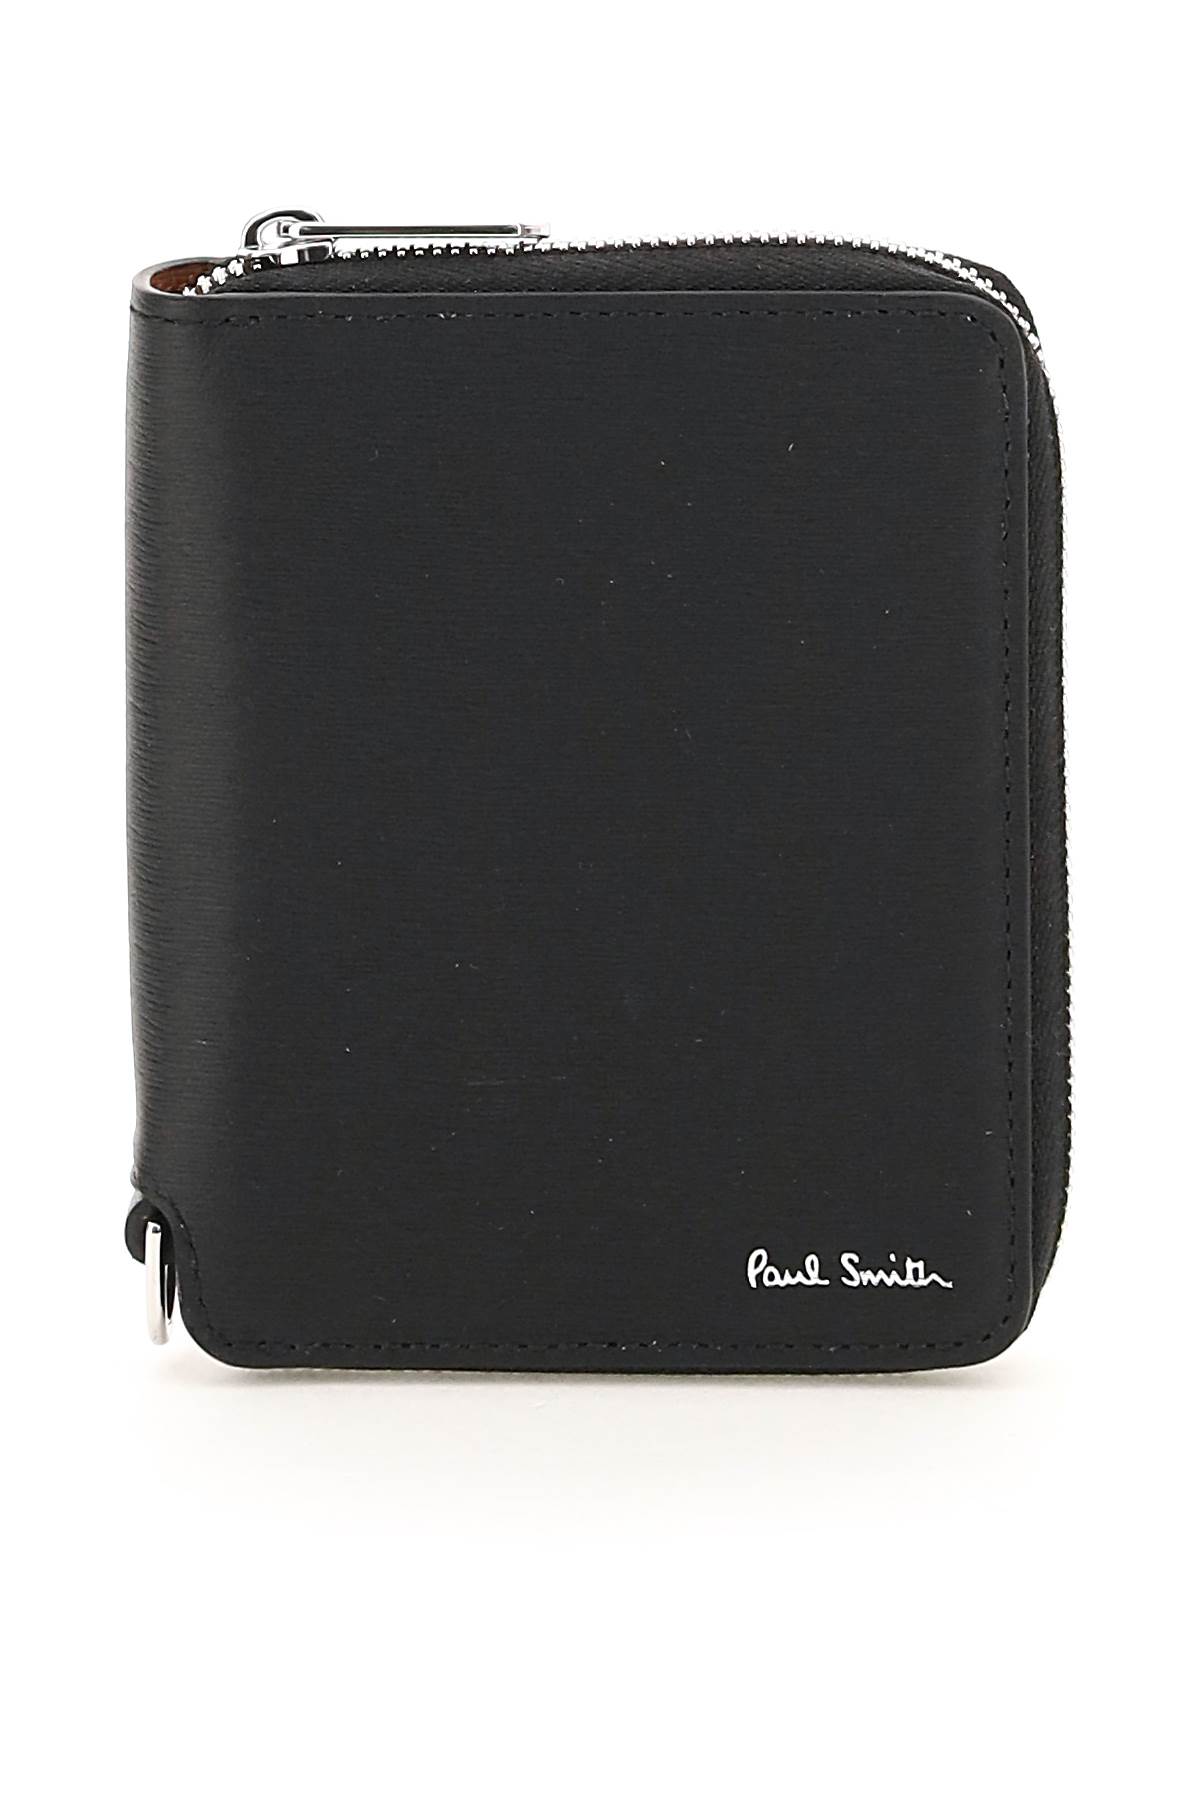 Paul Smith Straw-grain Leather Mini Zip-around Wallet